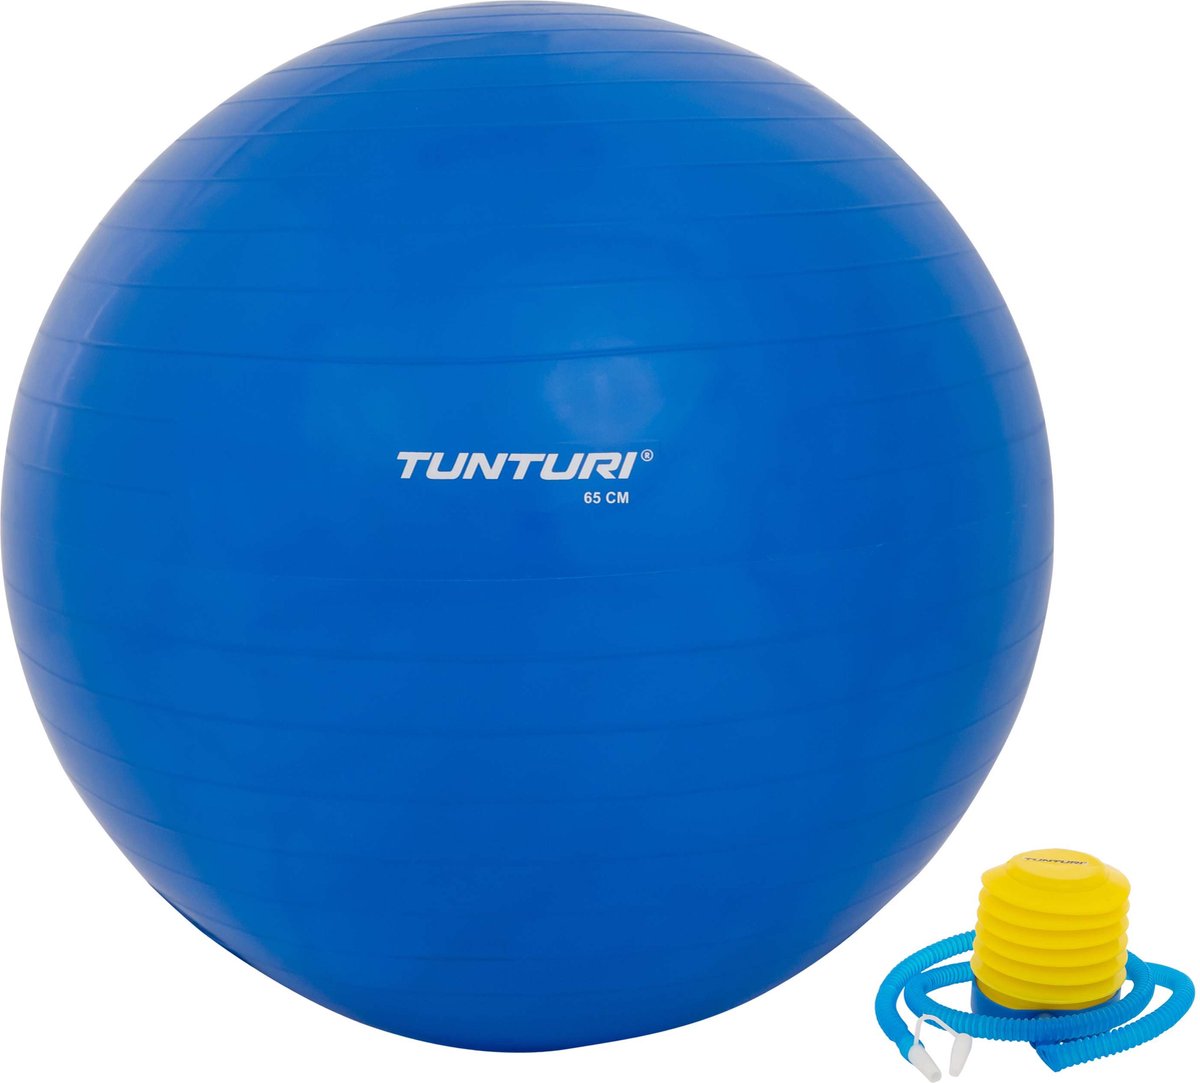 Tunturi Fitness bal - Yoga bal inclusief pomp - Pilates bal - Zwangerschaps bal - 65 cm - Kleur: blauw - Incl. gratis fitness app - Tunturi